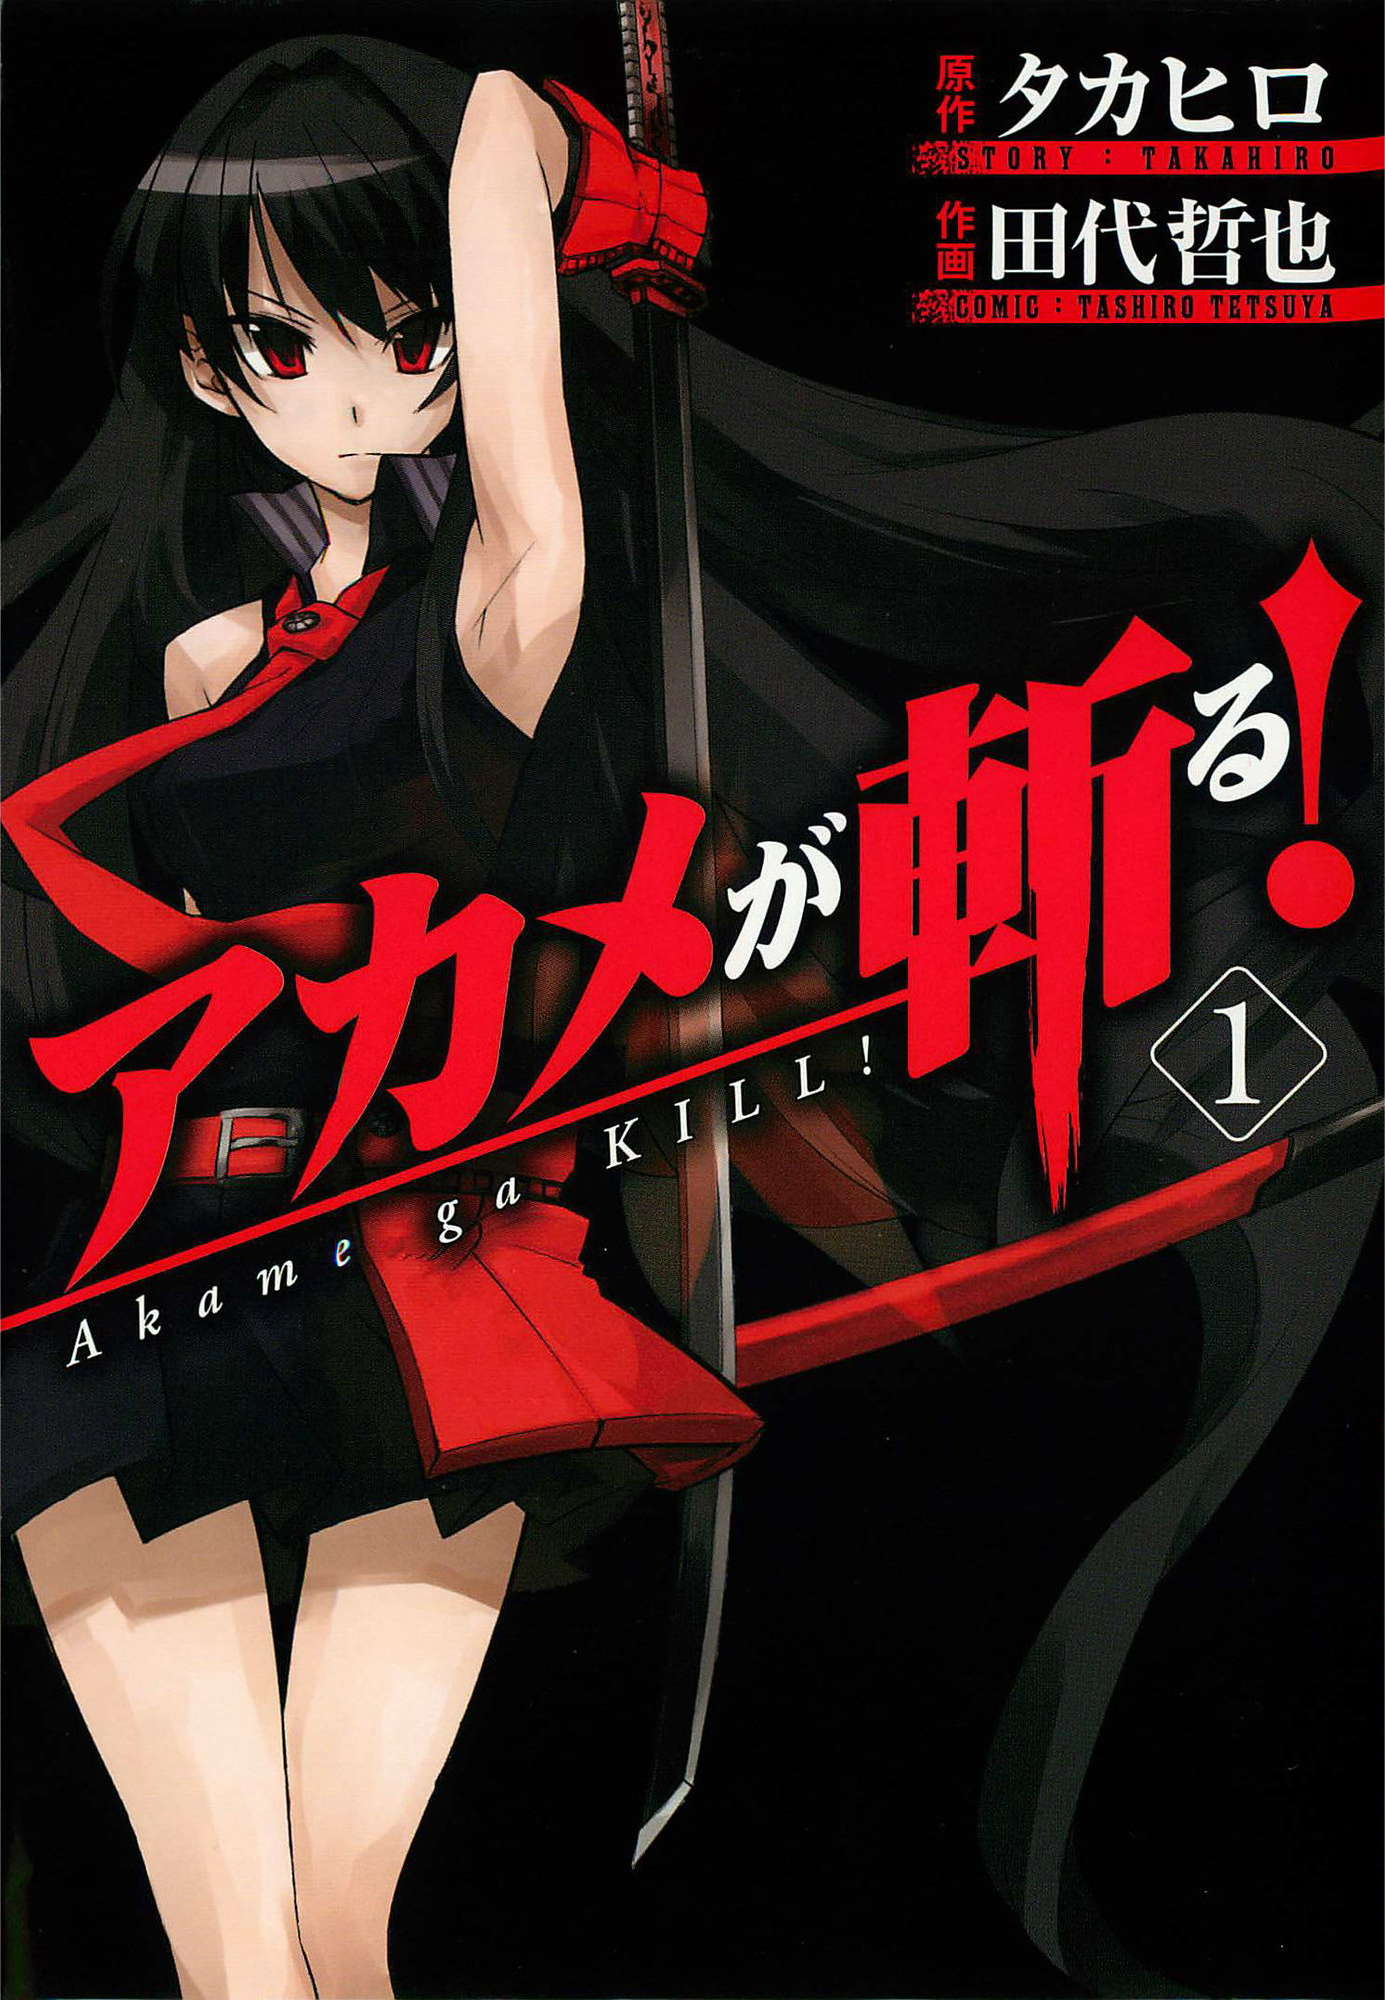 Chapter 55 (Zero), Akame Ga Kill! Wiki